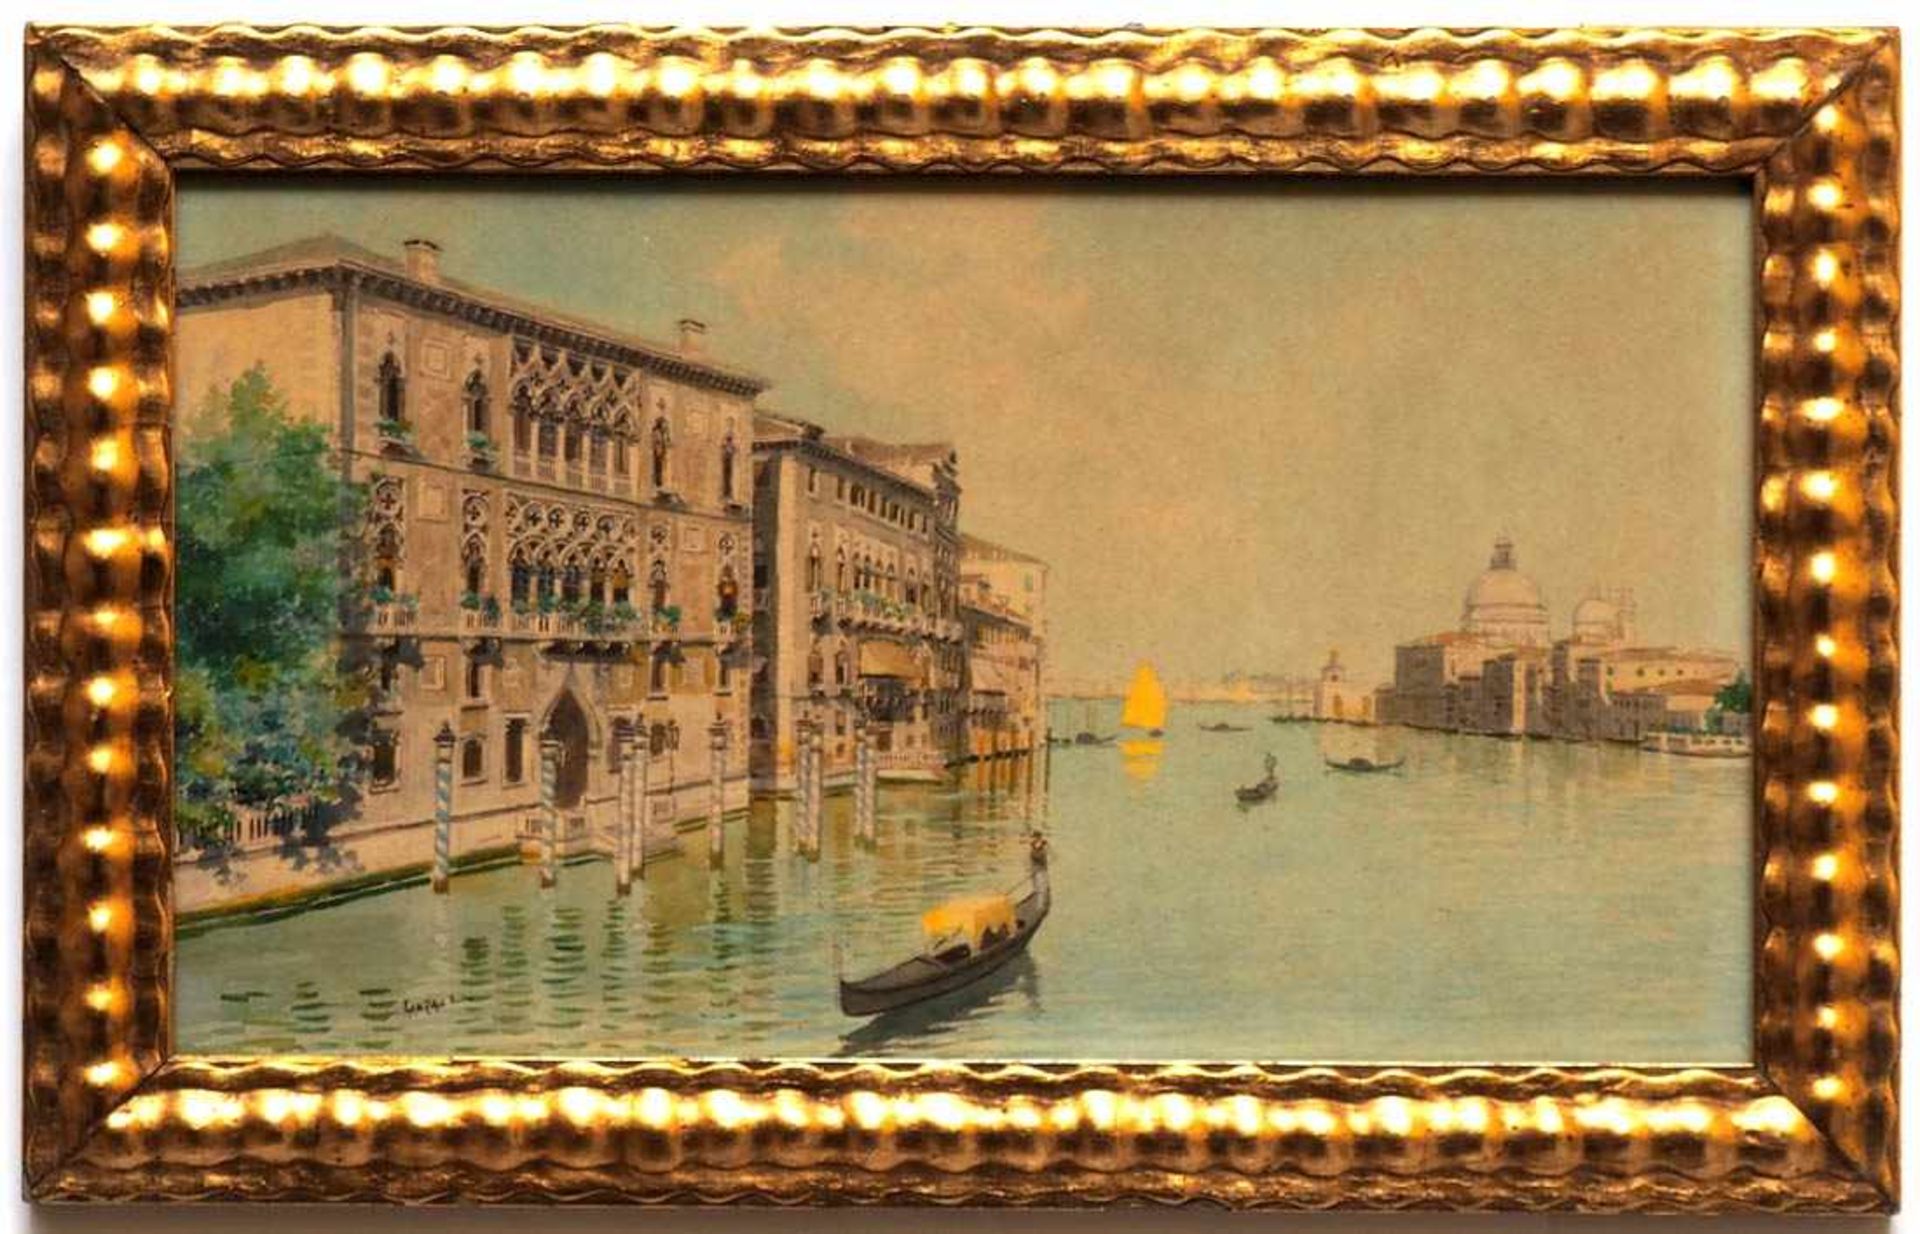 Lanza, Luigi, 1860 - 1913Blick über den Canale Grande mit dem Palazzo Cavalli-Franchetti im